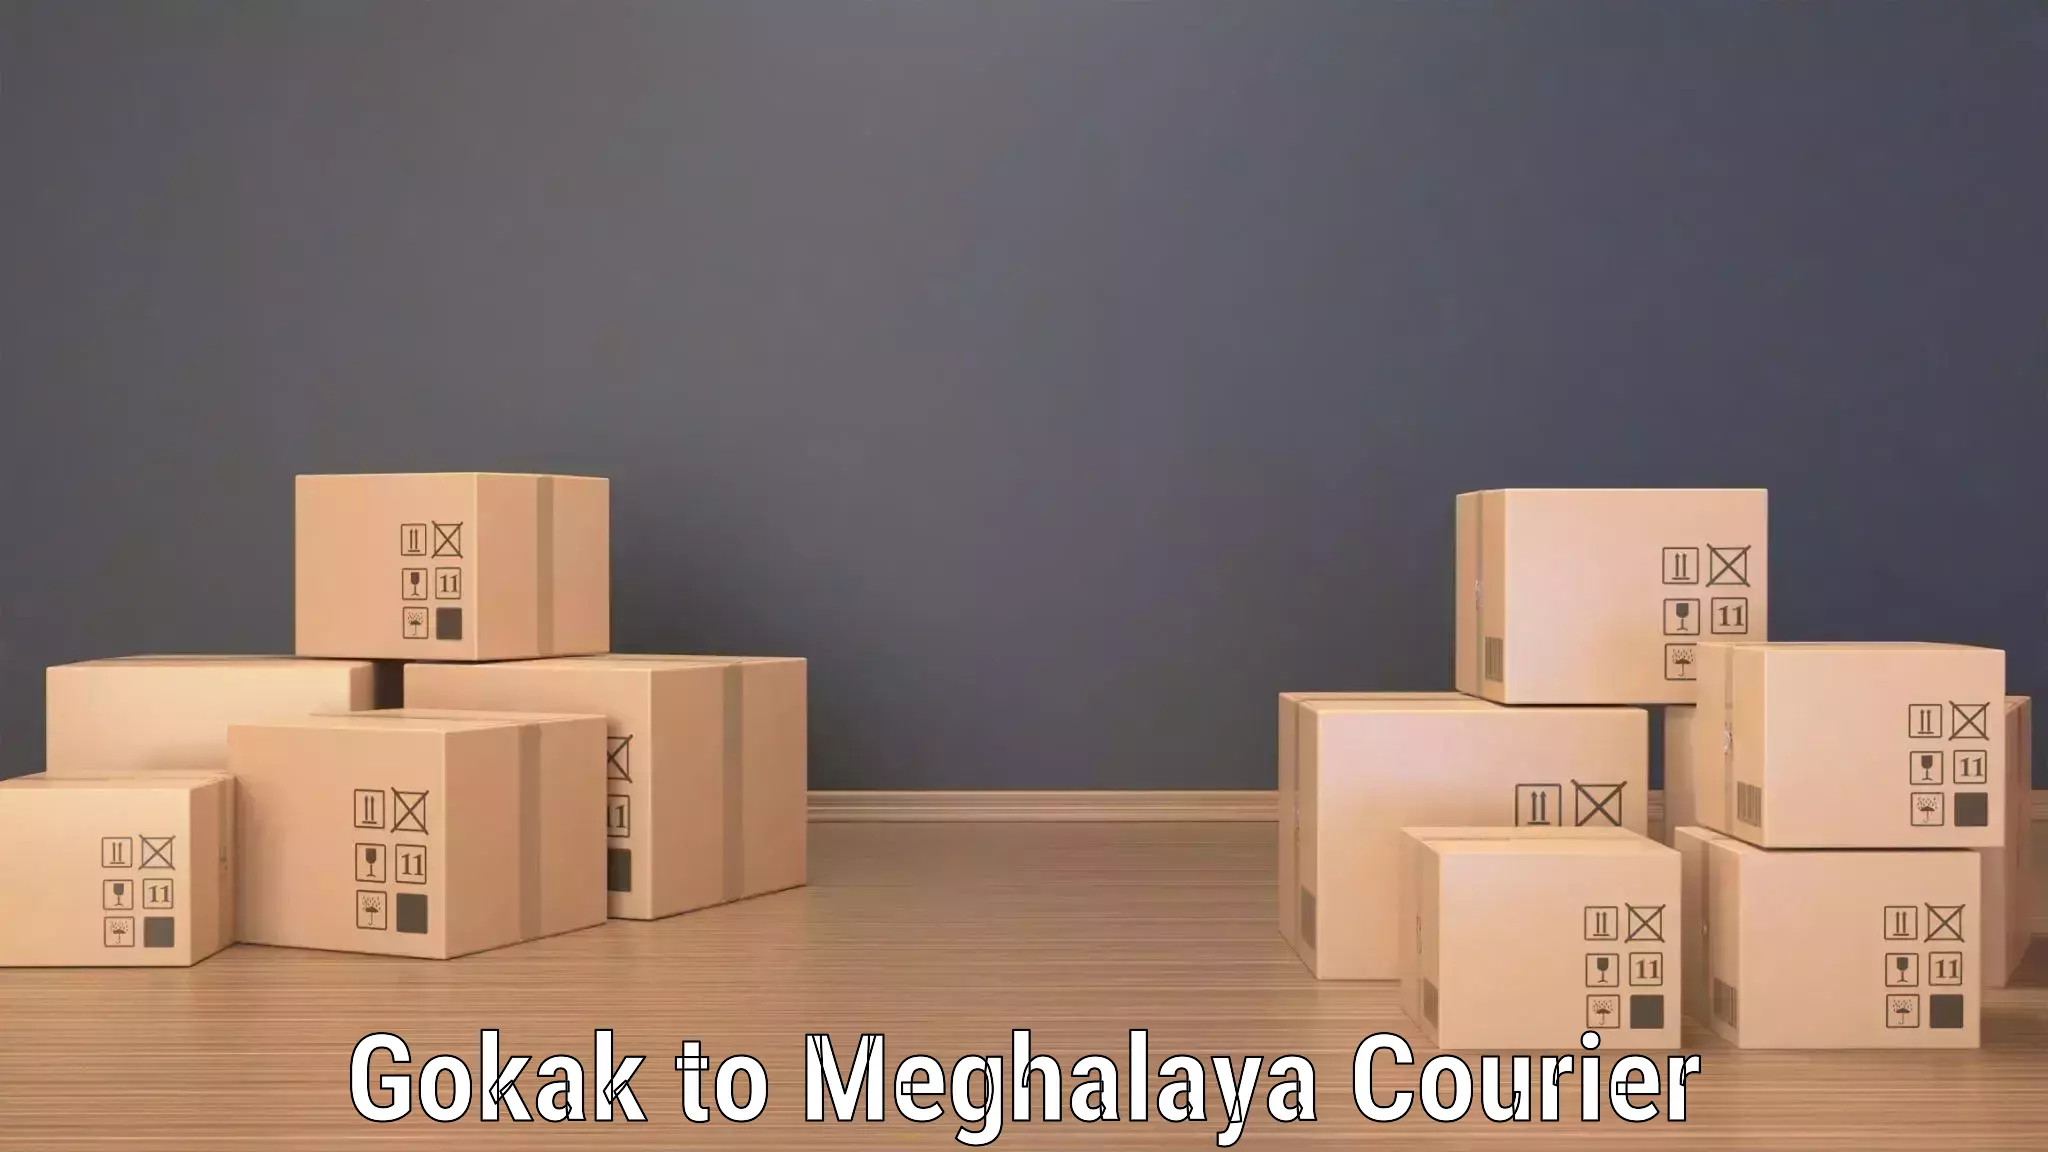 24/7 courier service in Gokak to Shillong